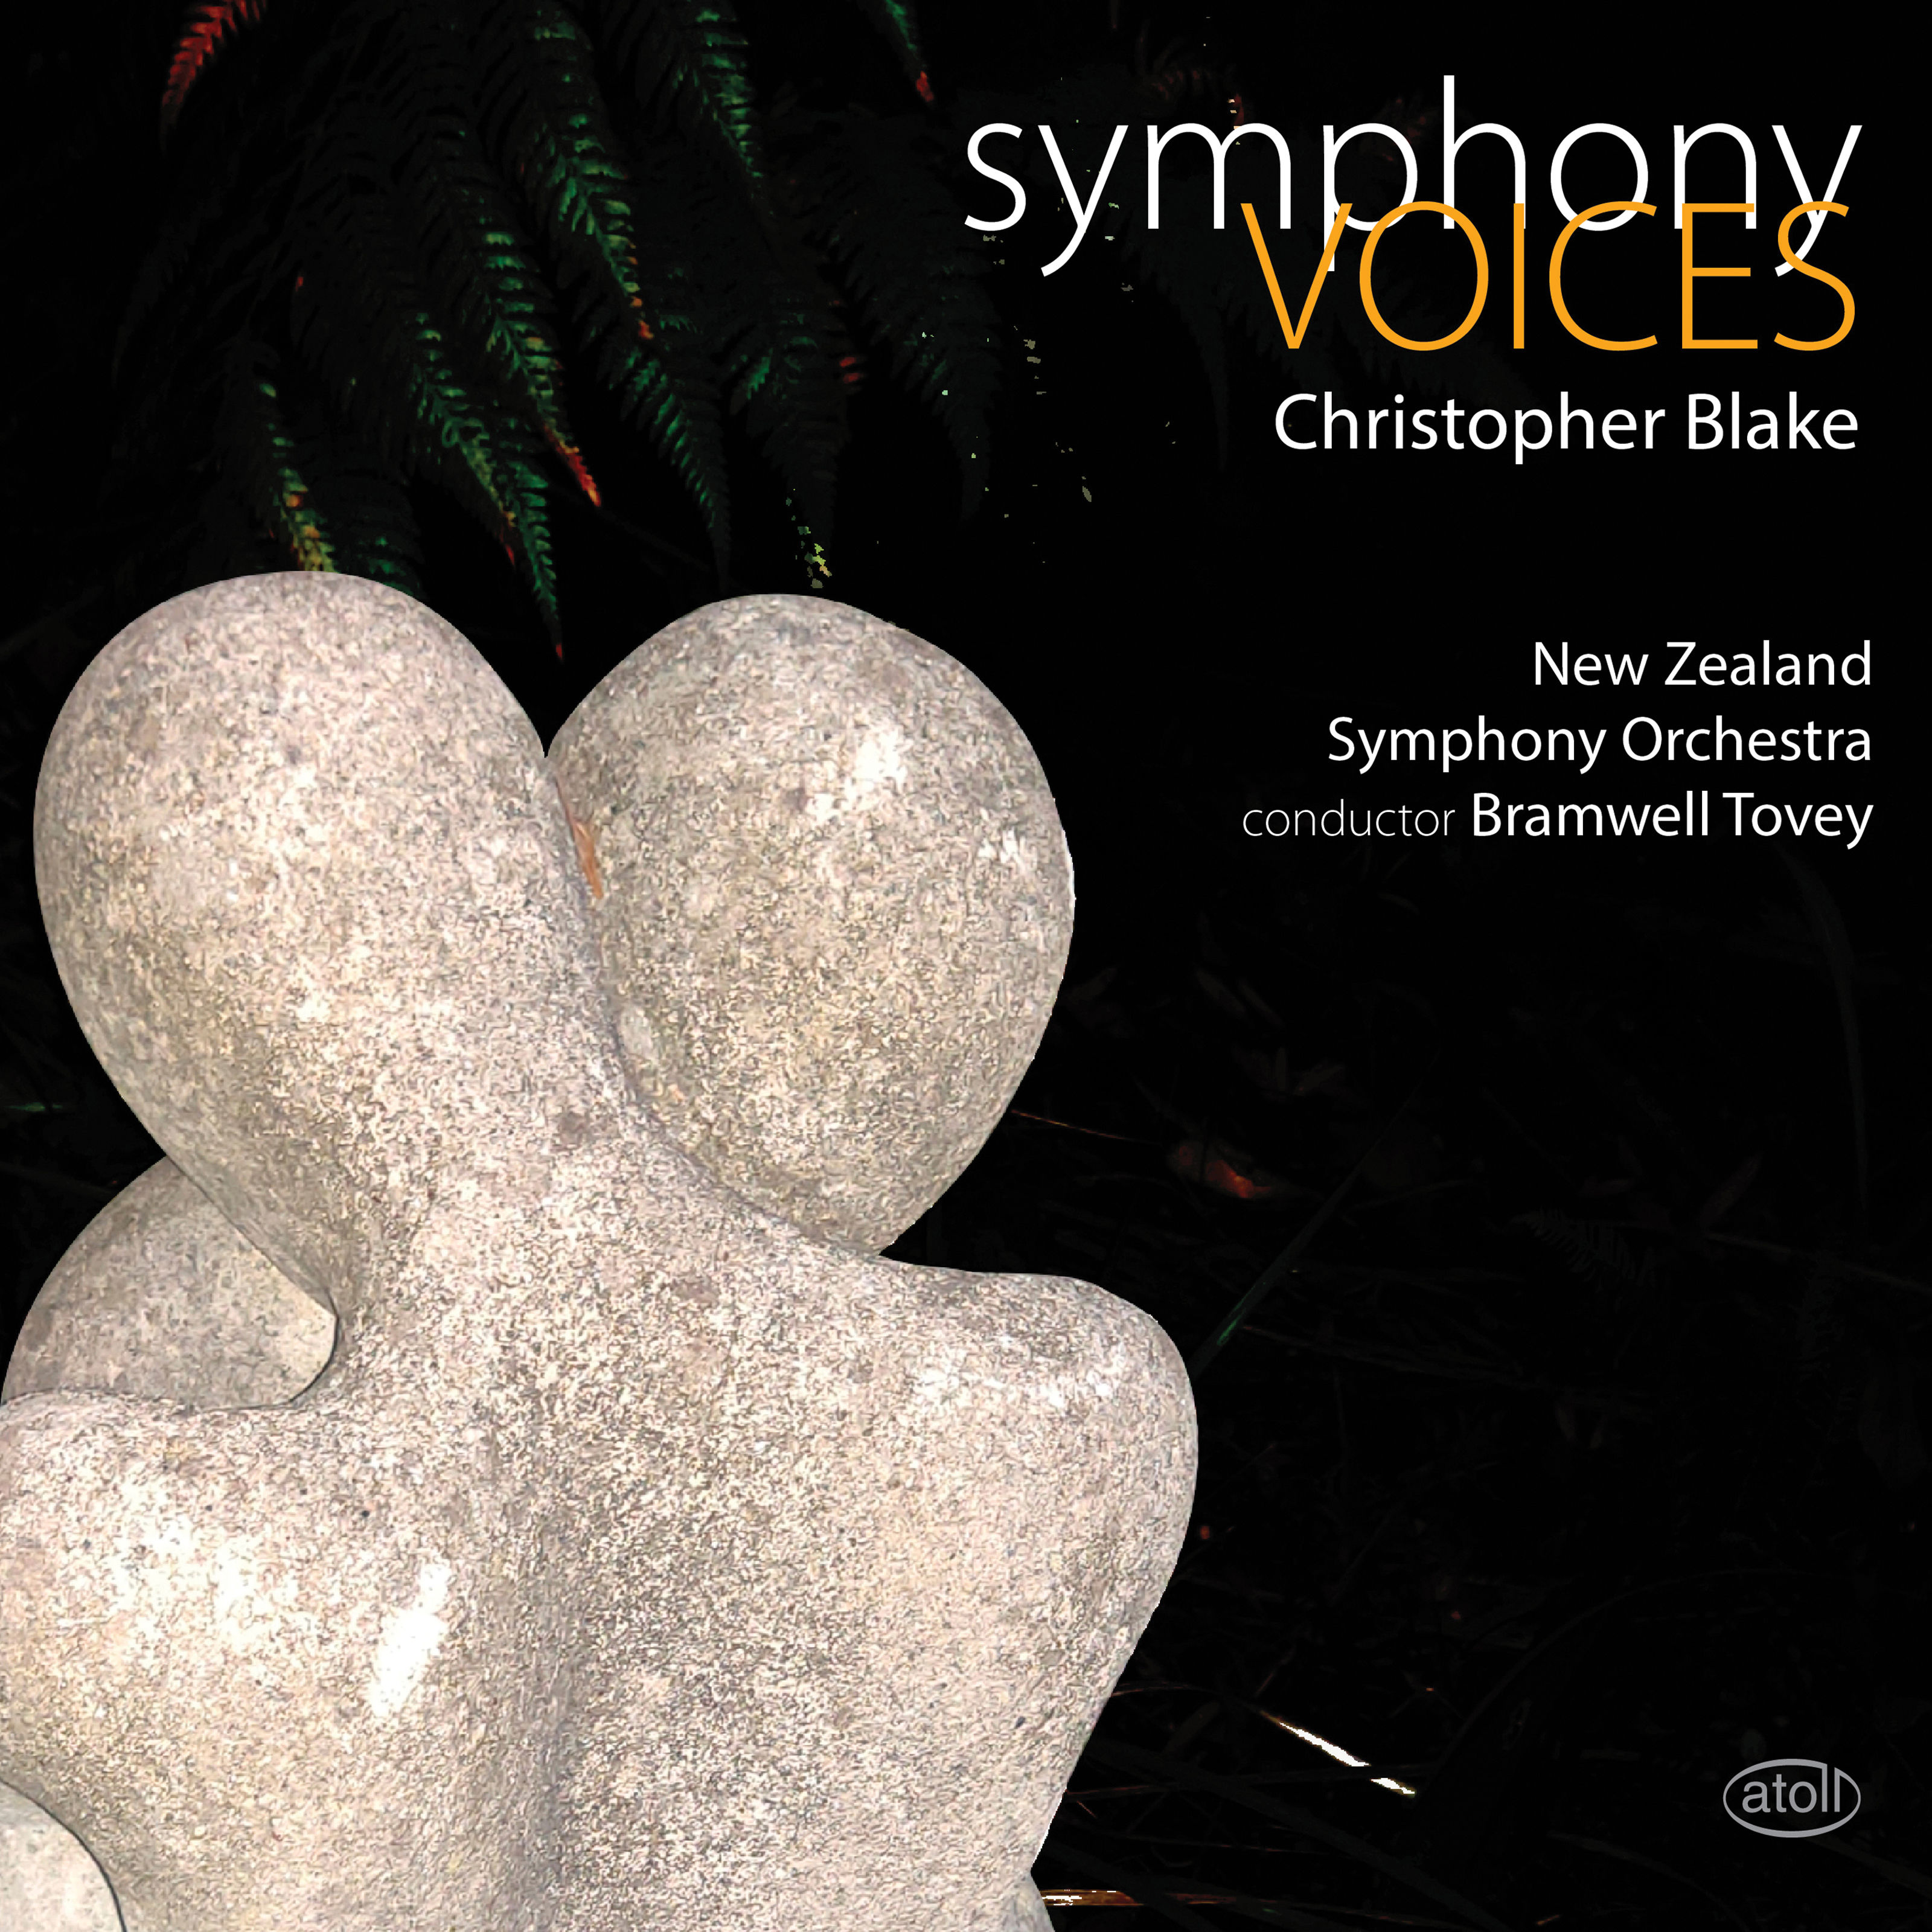 New Zealand Symphony Orchestra & Bramwell Tovey - Christopher Blake: Symphony - Voices (Live) (2019) [FLAC 24bit/48kHz]